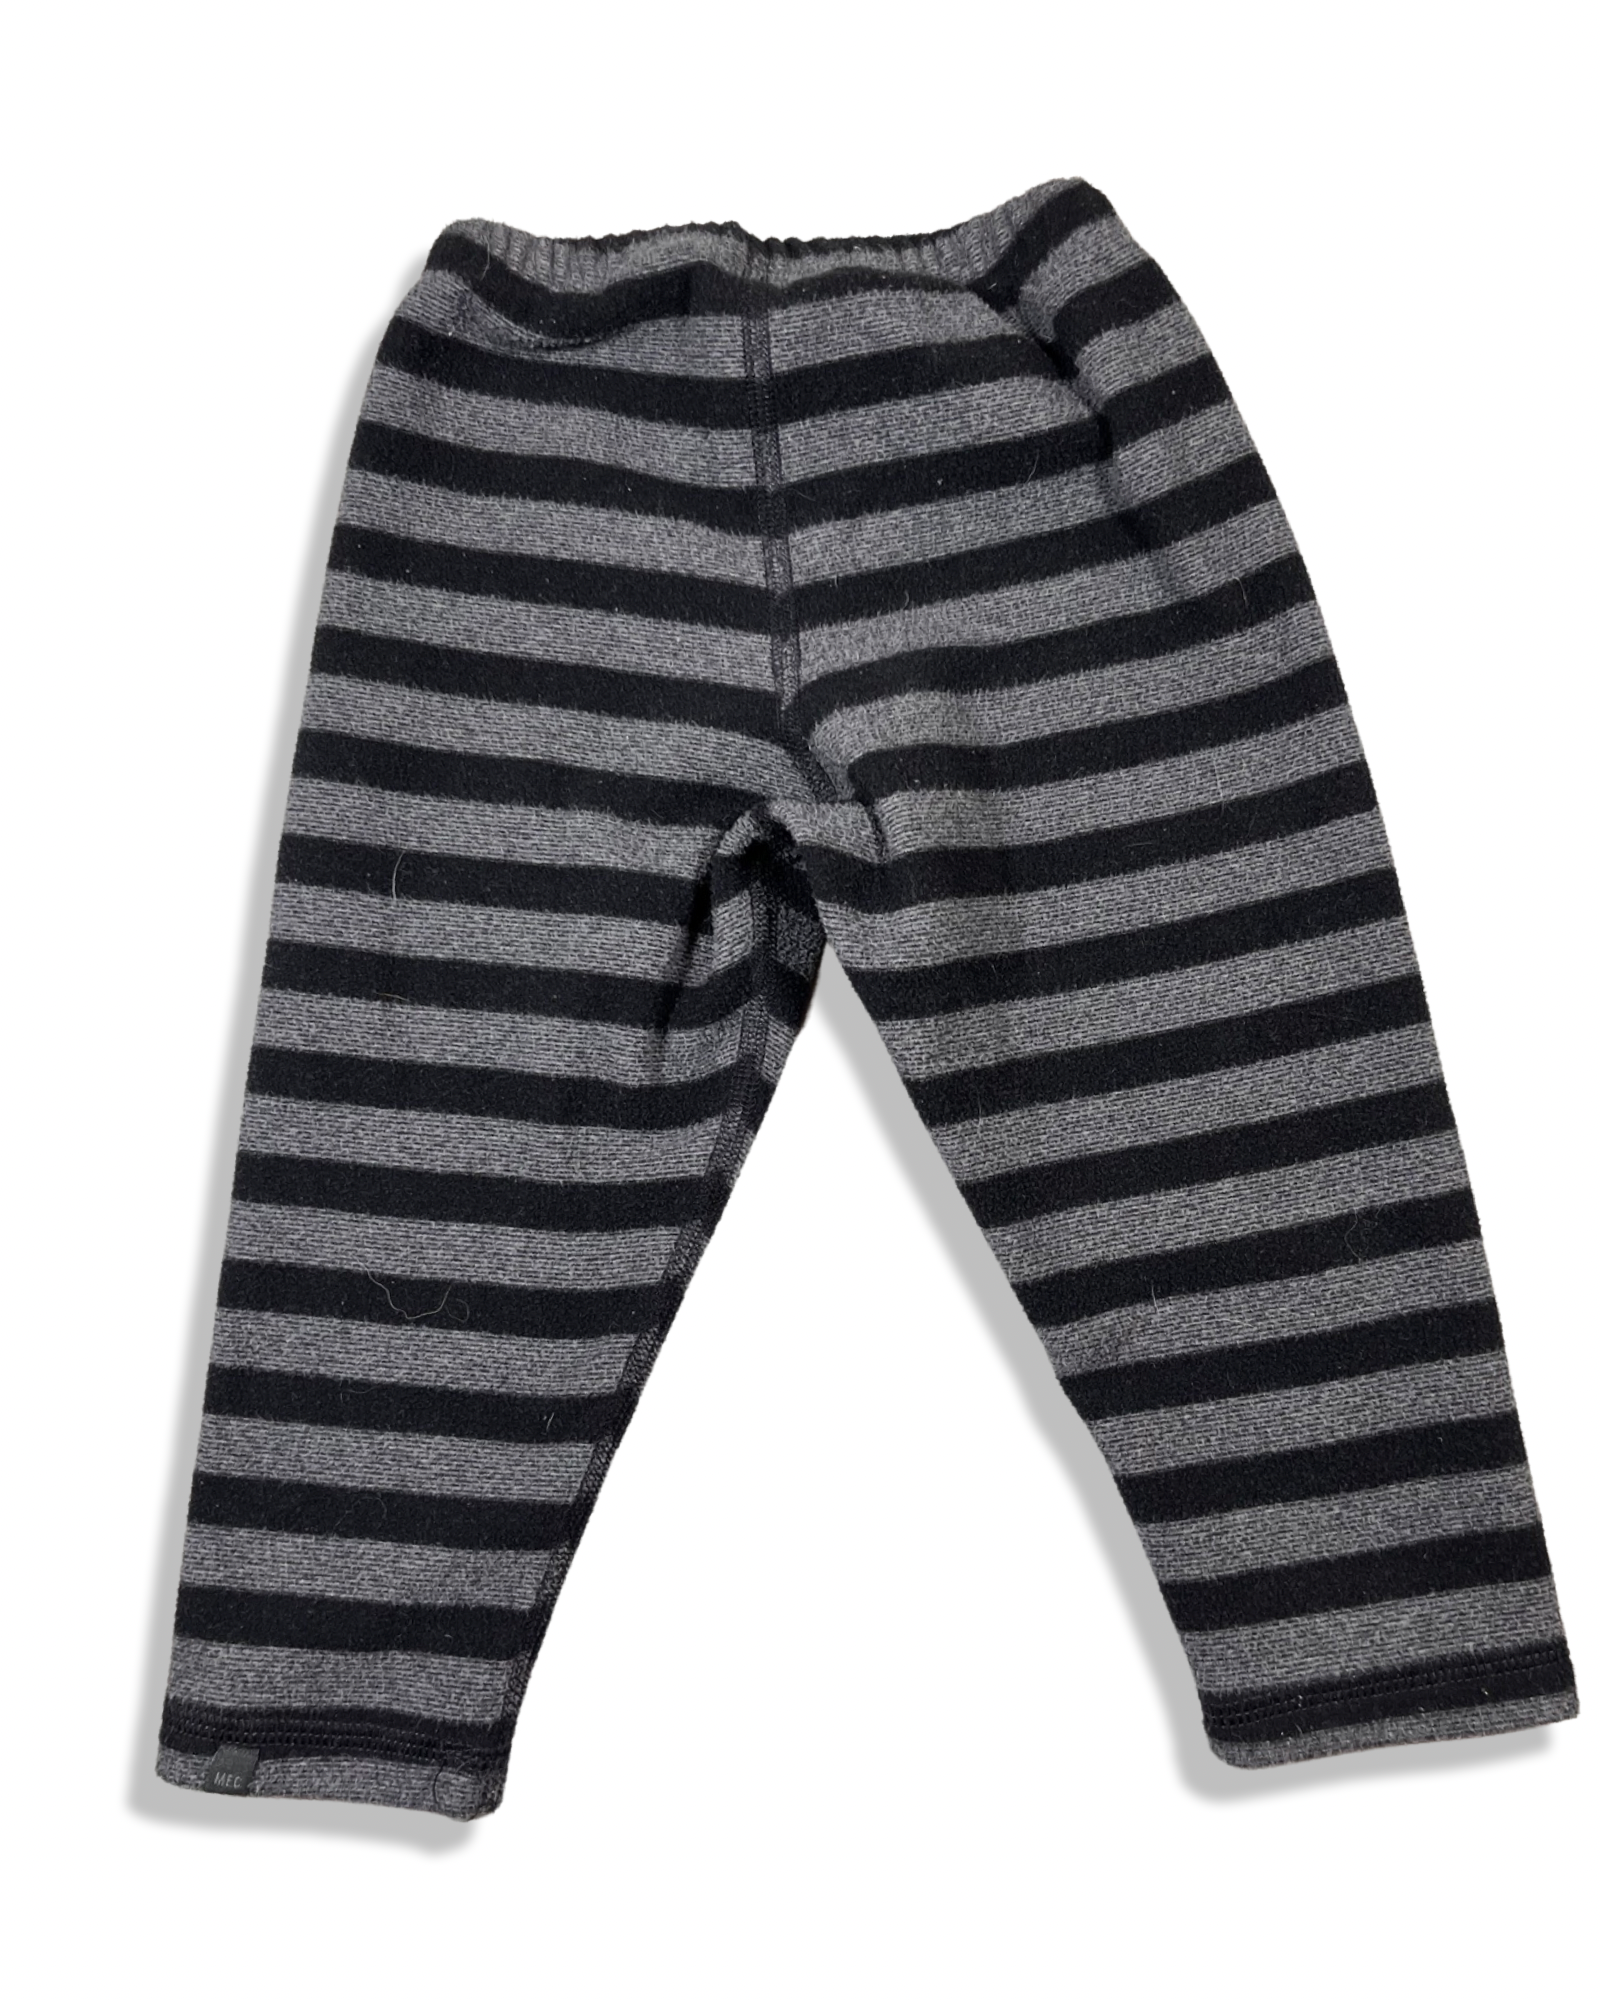 MEC Cozy Black and Grey Pants (12M)